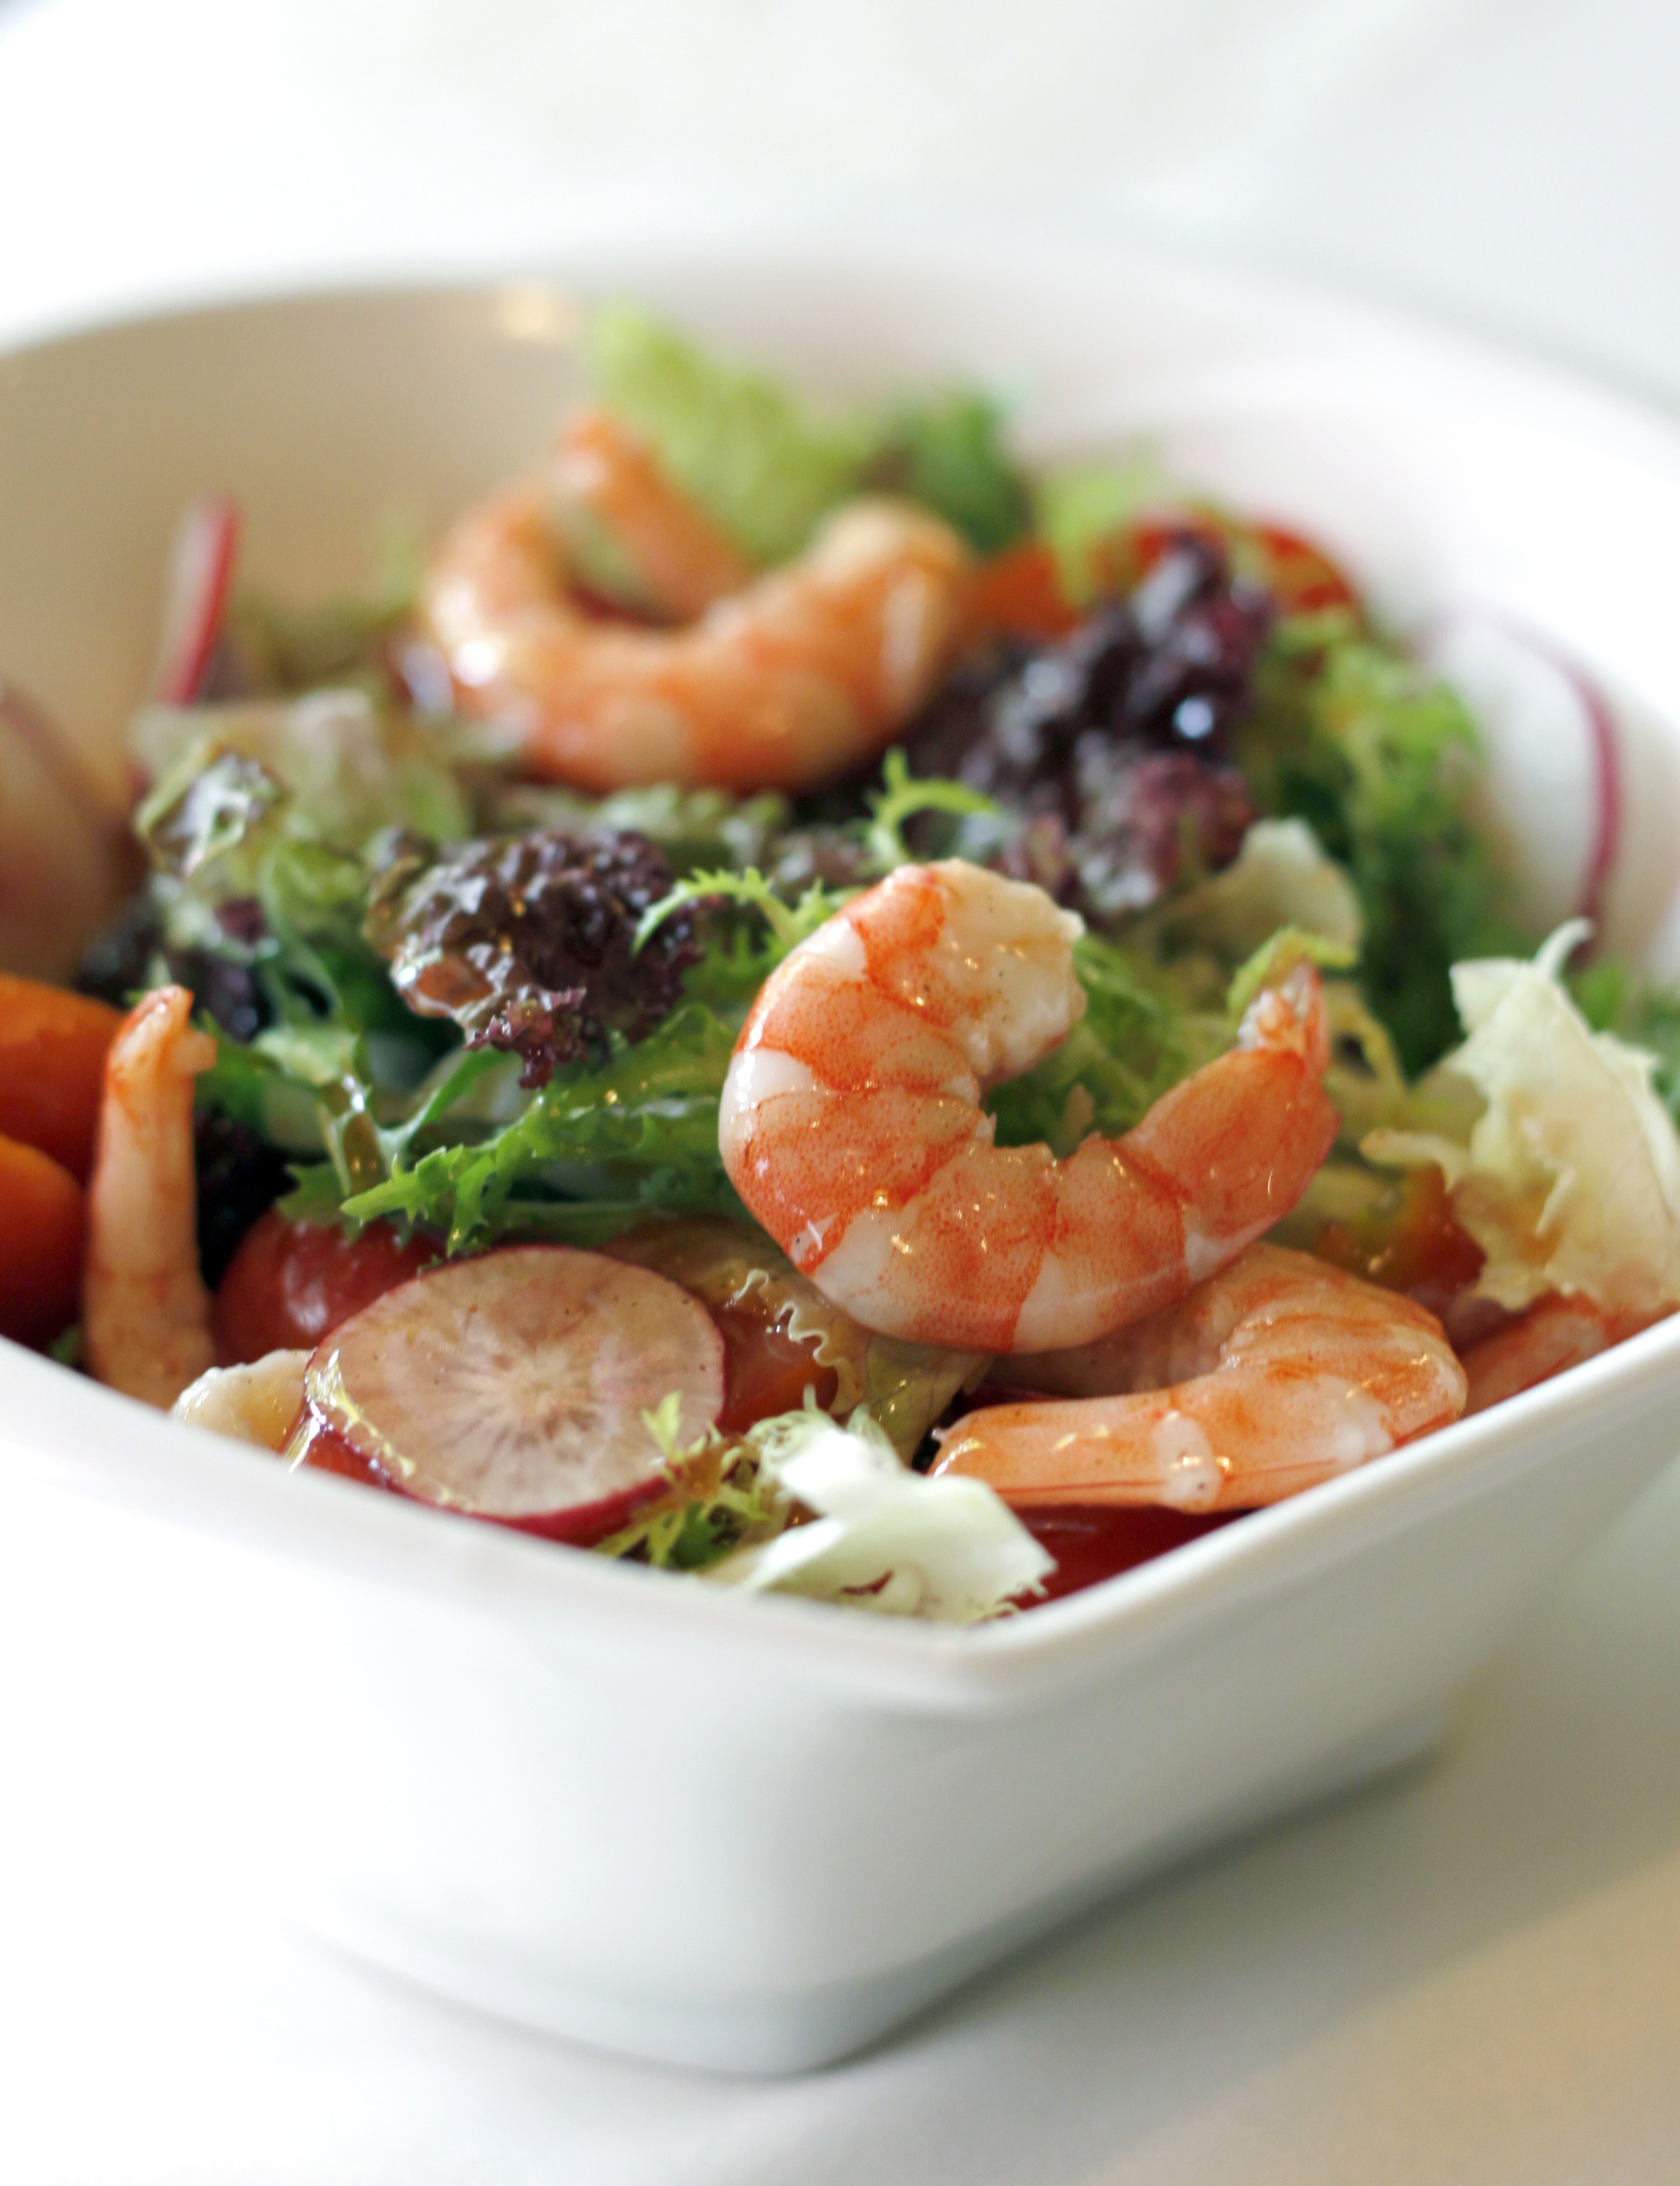 Shrimp and vegetable salad photo